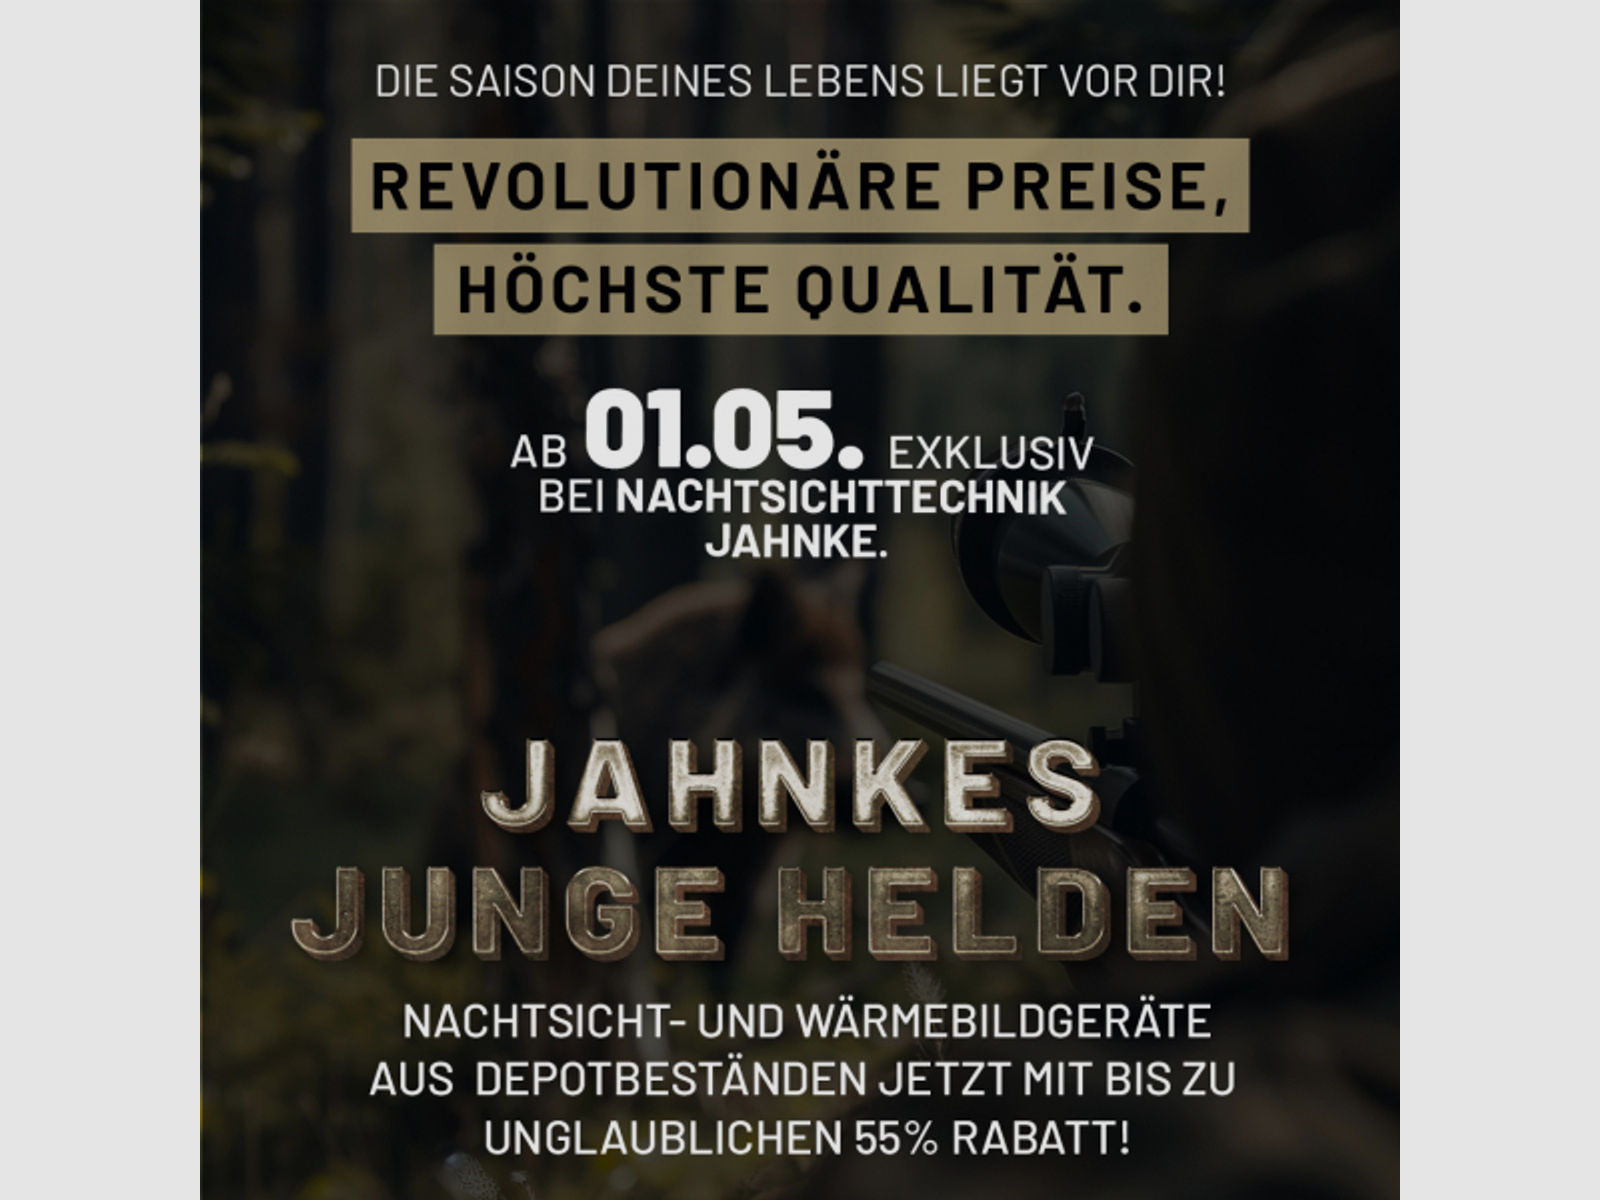 Nachtsichttechnik Jahnke DJ-81×25 JJH LK 3 S 1, Jahnke Monochrom (Grau)